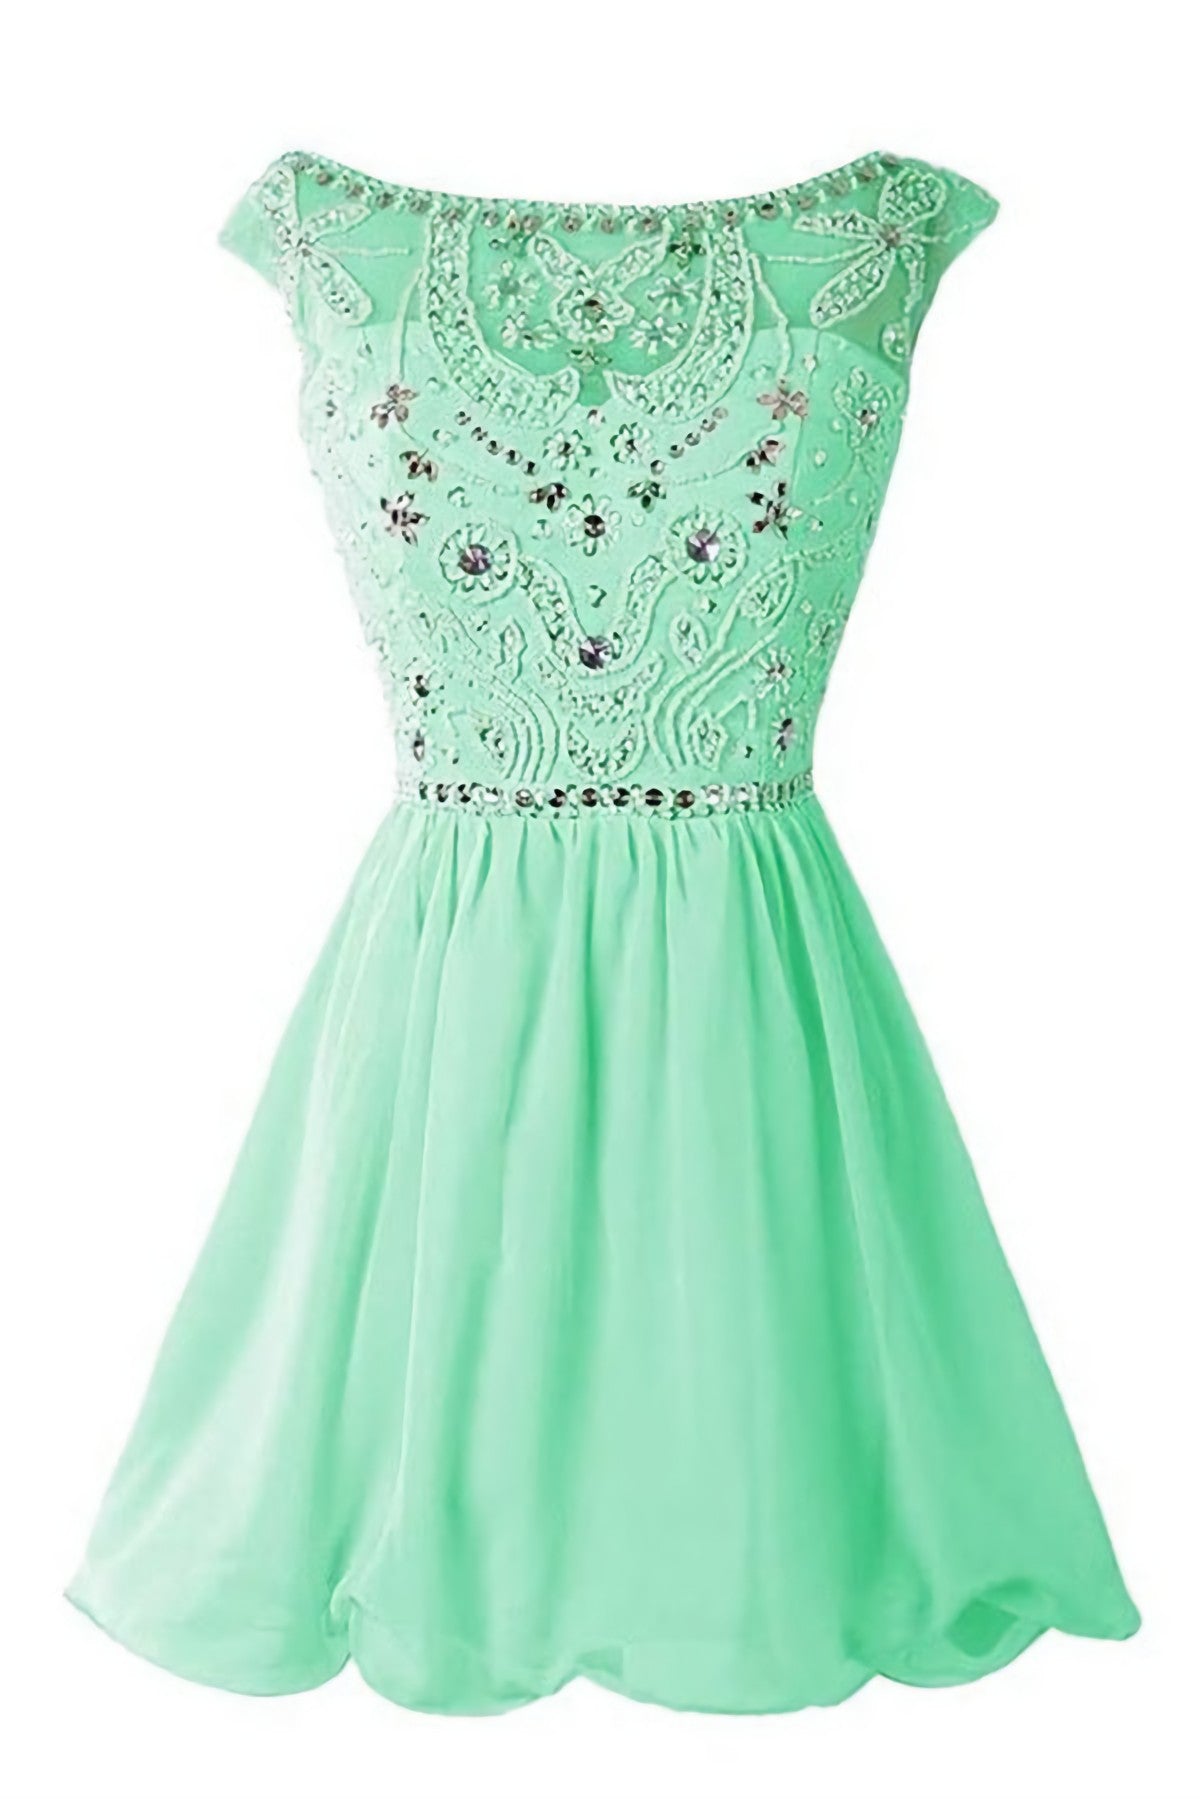 Green Chiffon Handmade Girly For Teens Homecoming Dresses